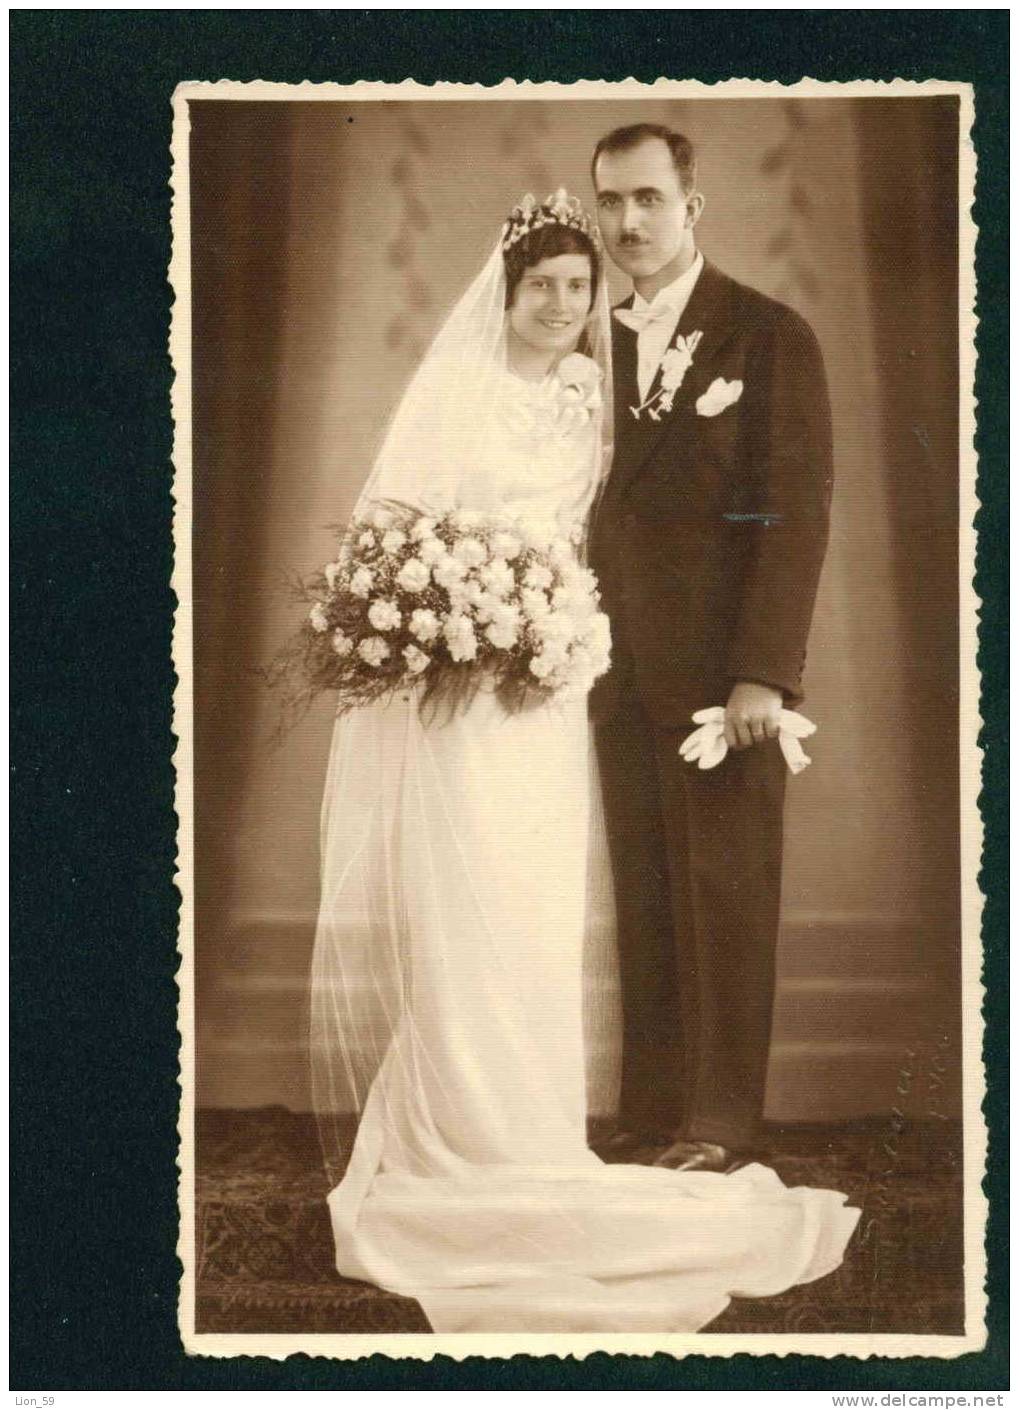 D3070 / Marriages  WEDDING , BRIDE W BRIDEGROOM Bulgaria 1930s Vintage REAL Photo PHOTOGRAPHER "SALASH" - ROUSSE - Marriages